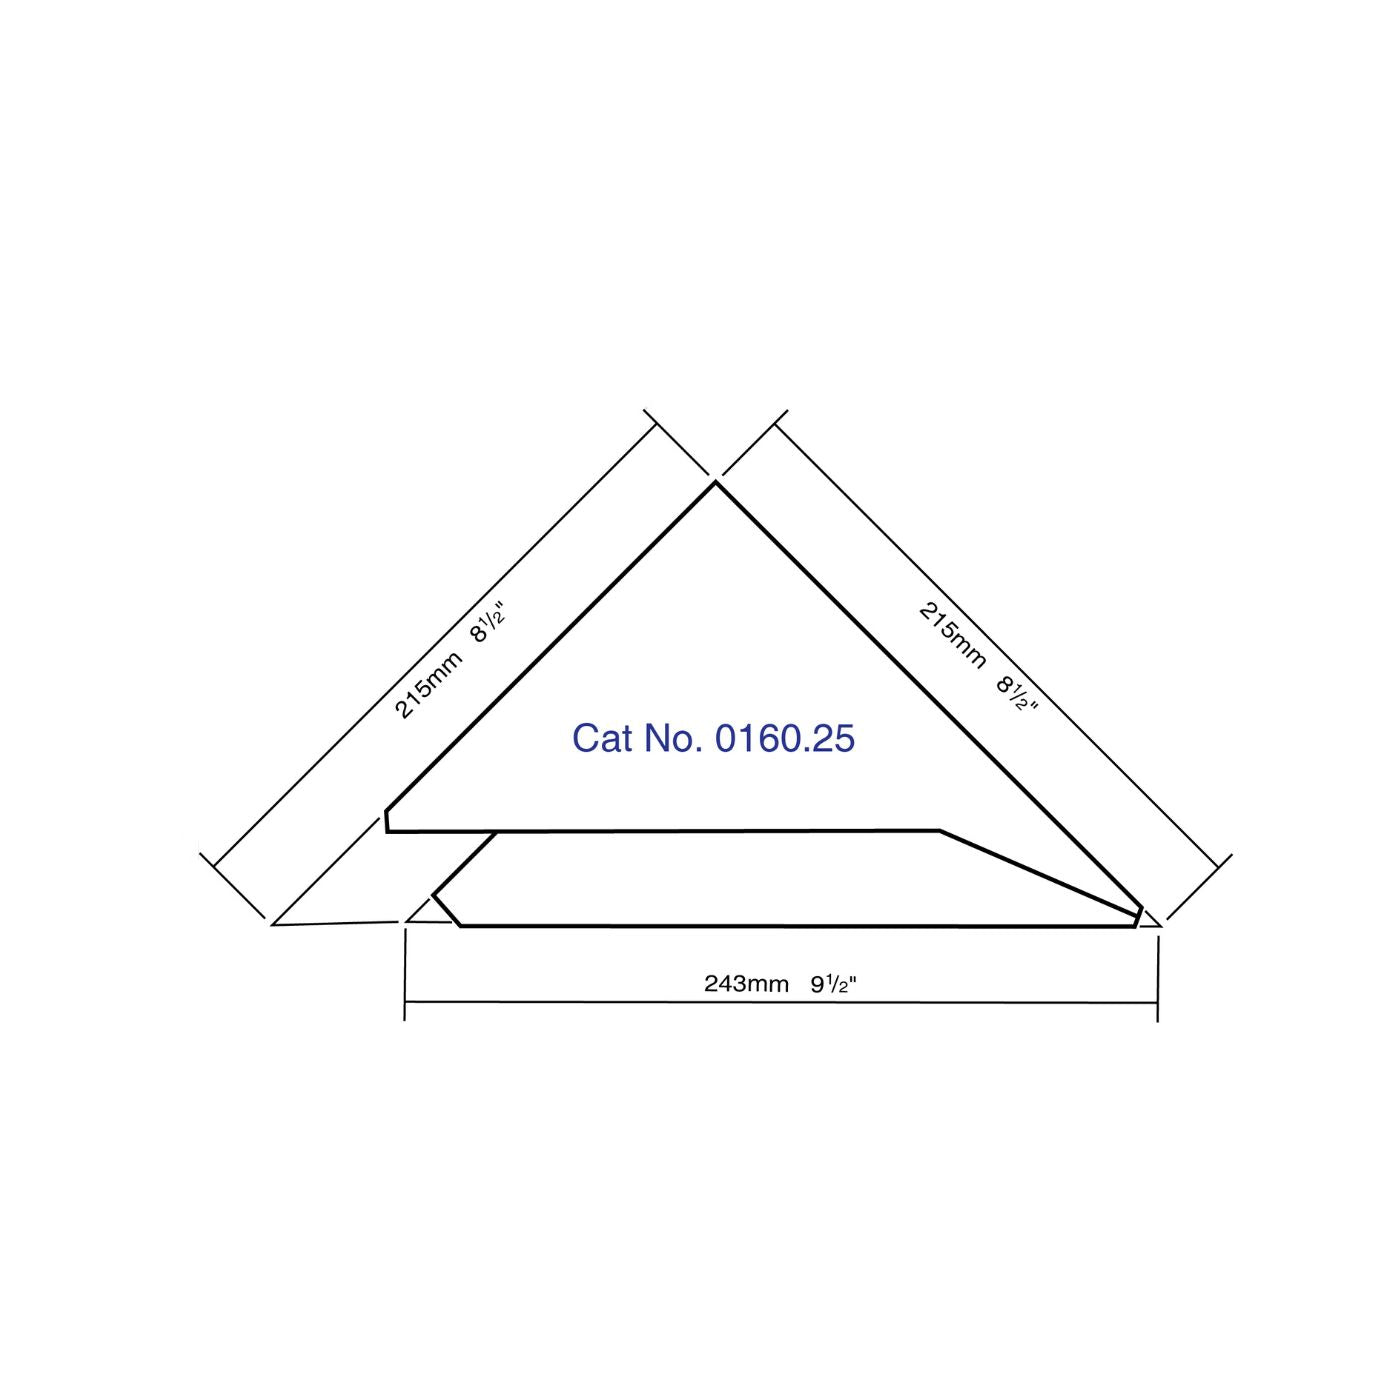 Blundell Harling Set Square Adjustable Acrylic Angle Line 30cm